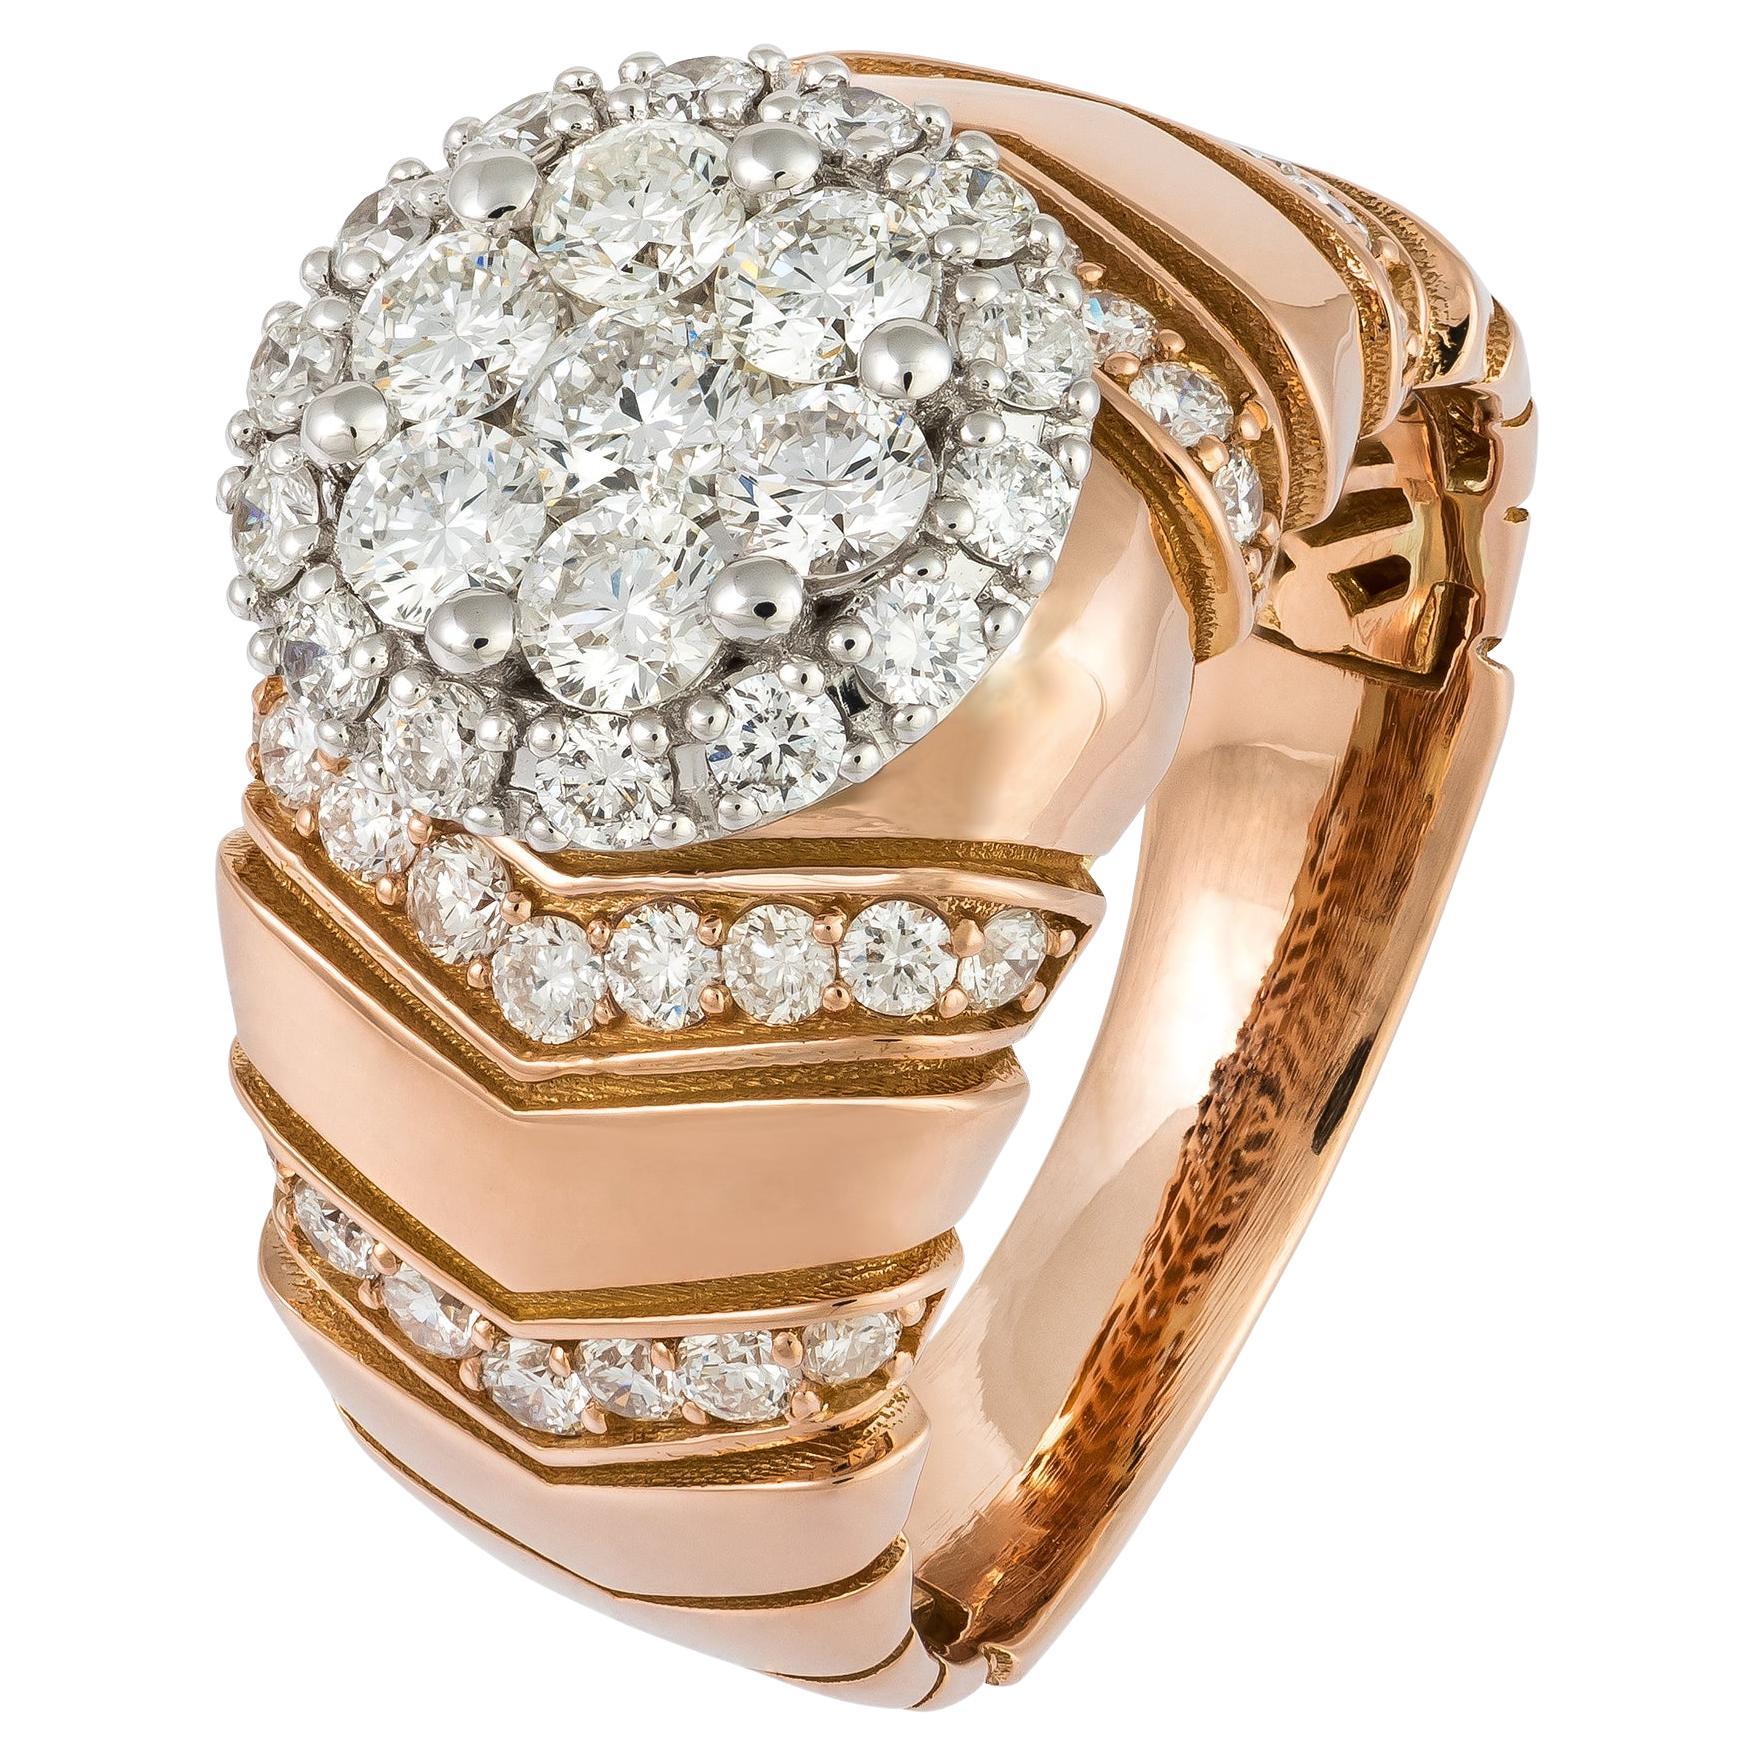 Statement White Pink 18K Gold White Diamond Ring for Her